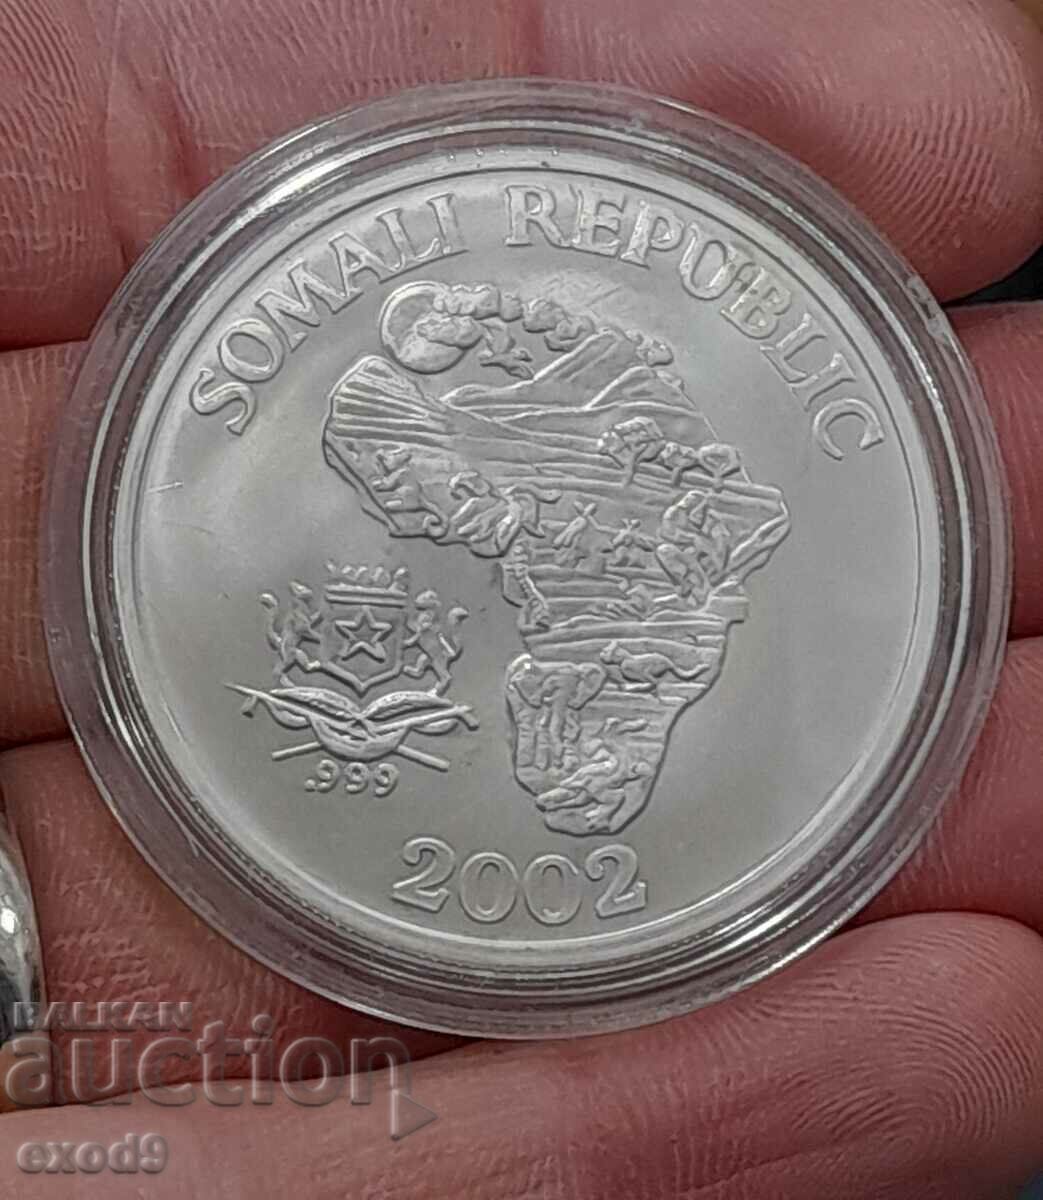 Silver coin 10 dollars / Somalia